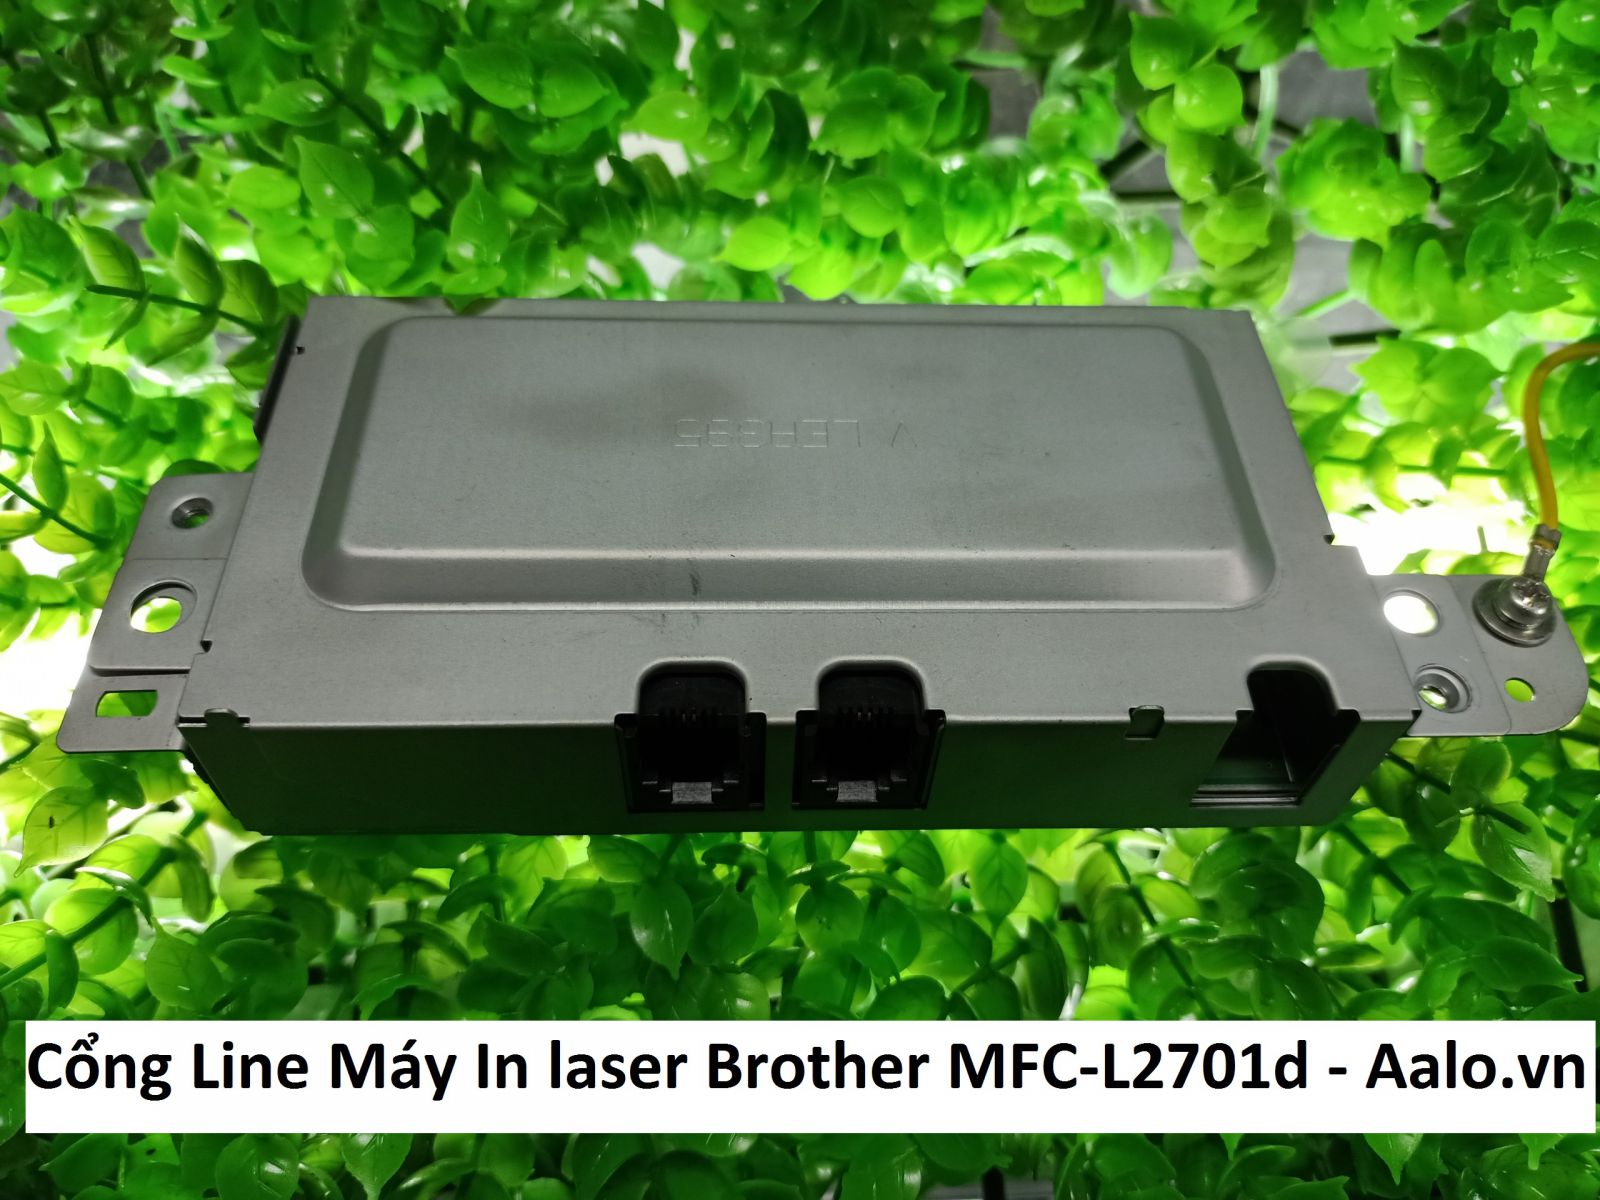 Cổng Line Máy In laser Brother MFC-L2701d - Aalo.vn